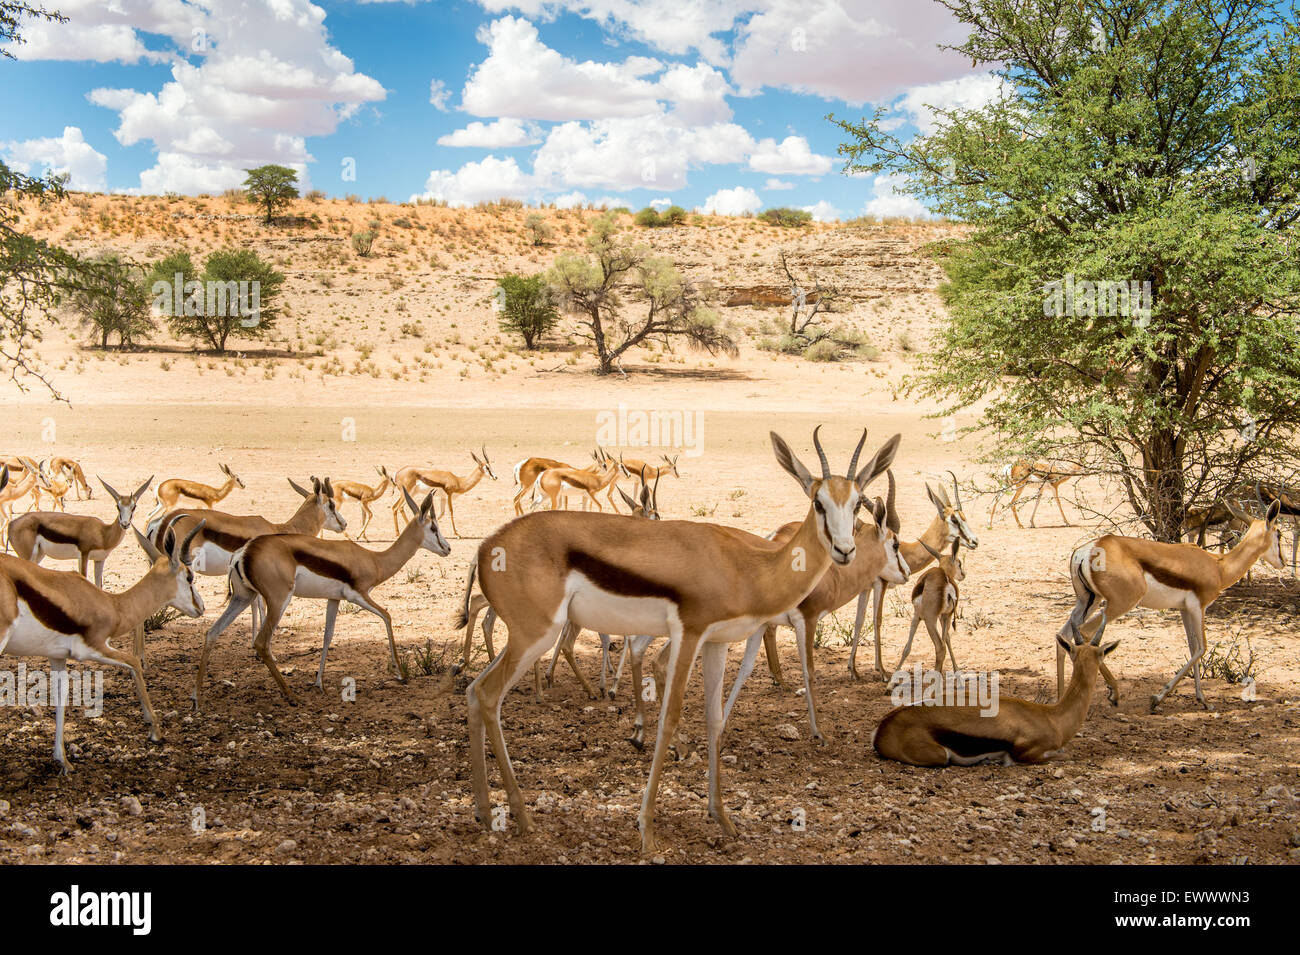 Kgalagadi Transfrontier Park, South Africa - springbok (Antidorcas marsupialis) Stock Photo